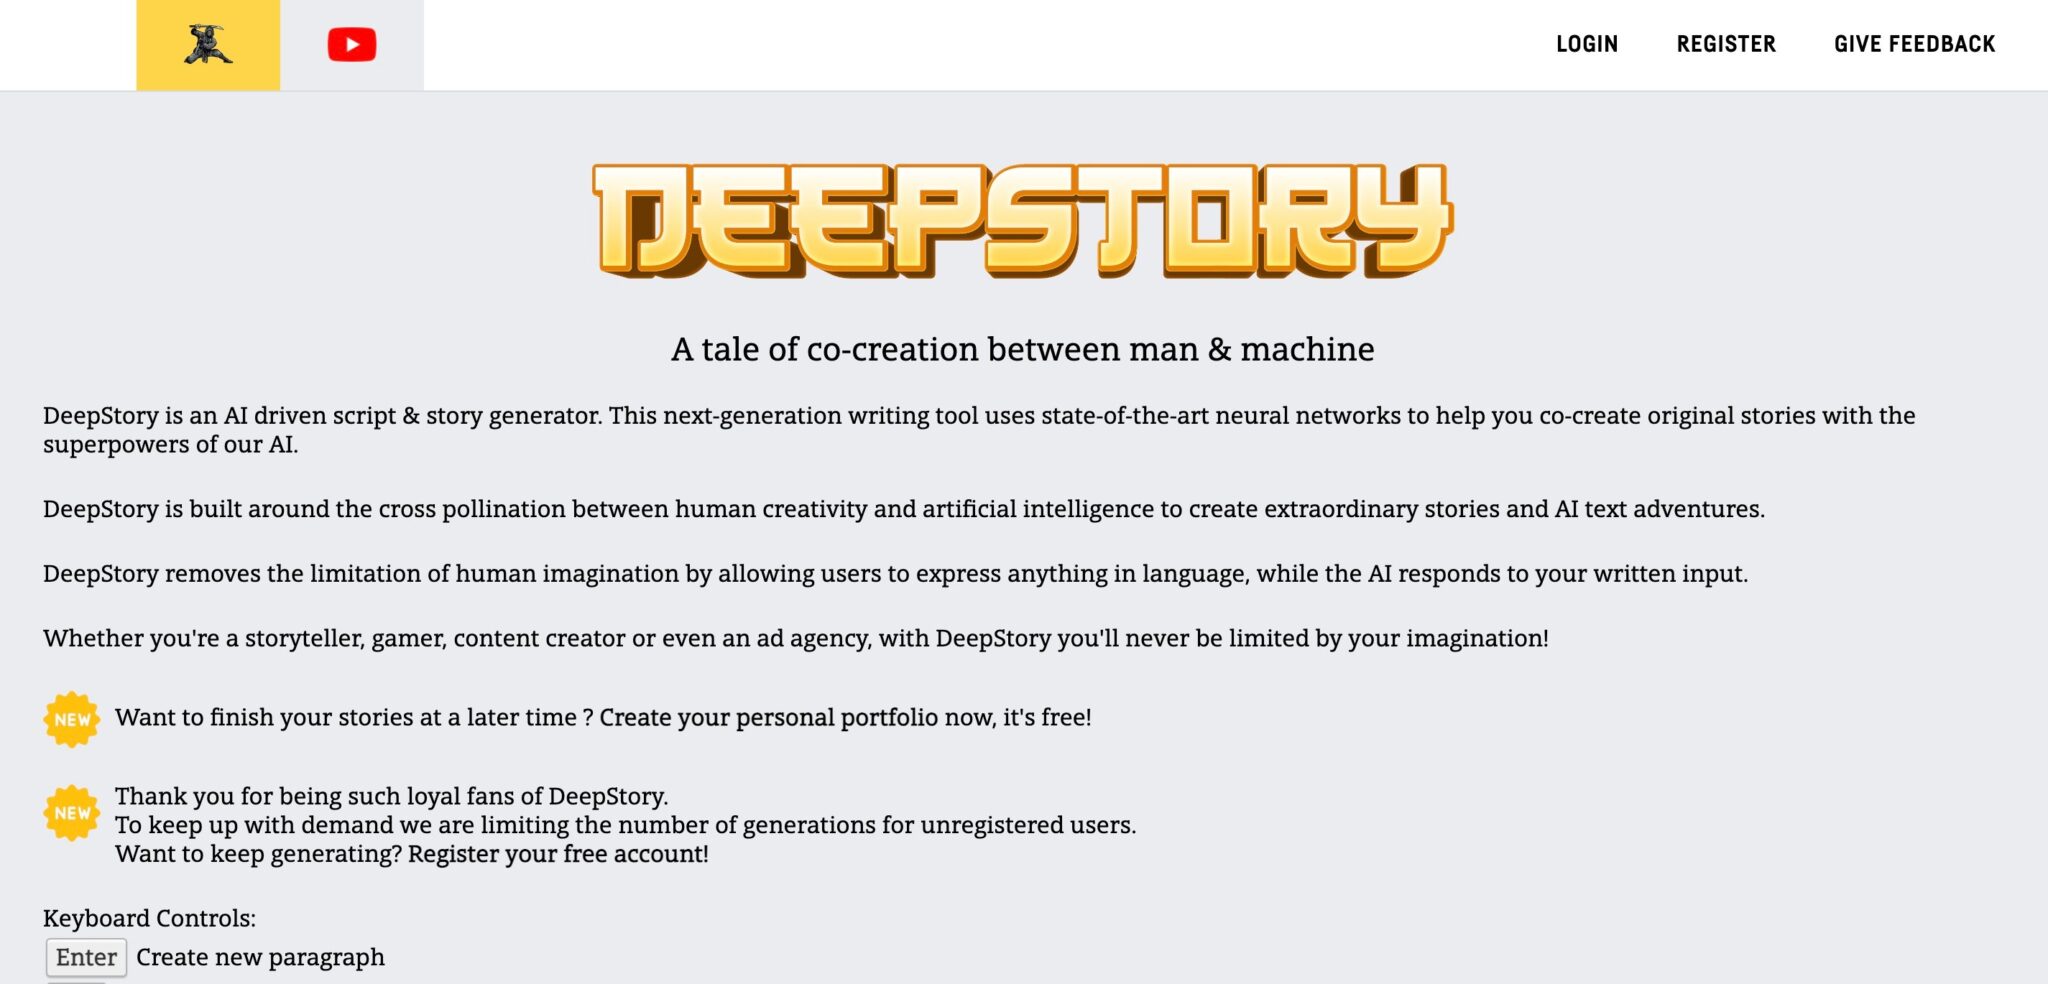 Deepstory AI story generator